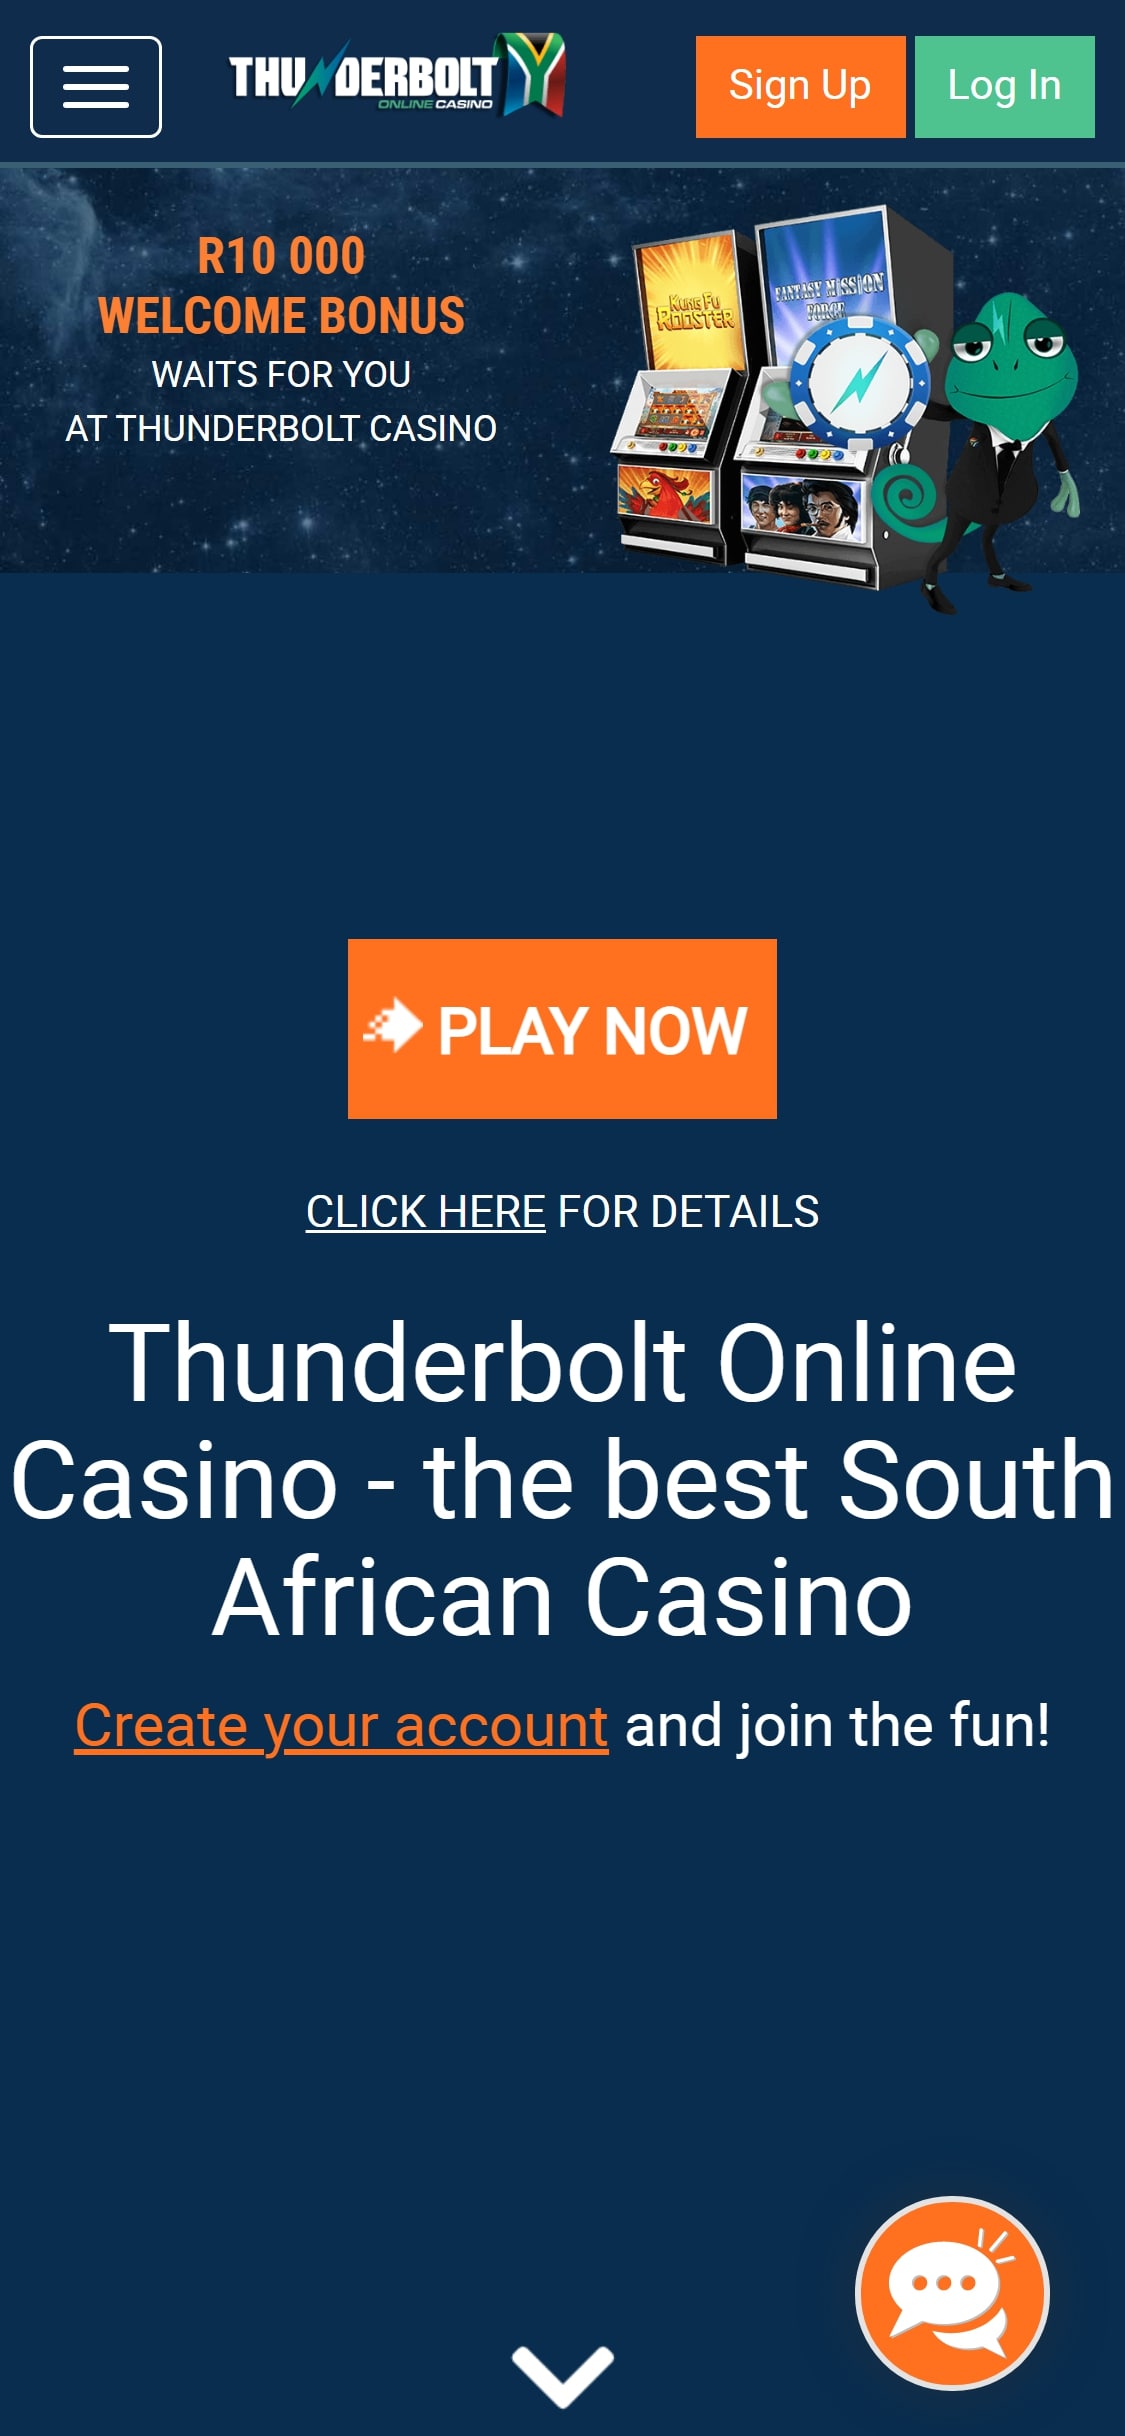 Thunderbolt Casino Mobile Review